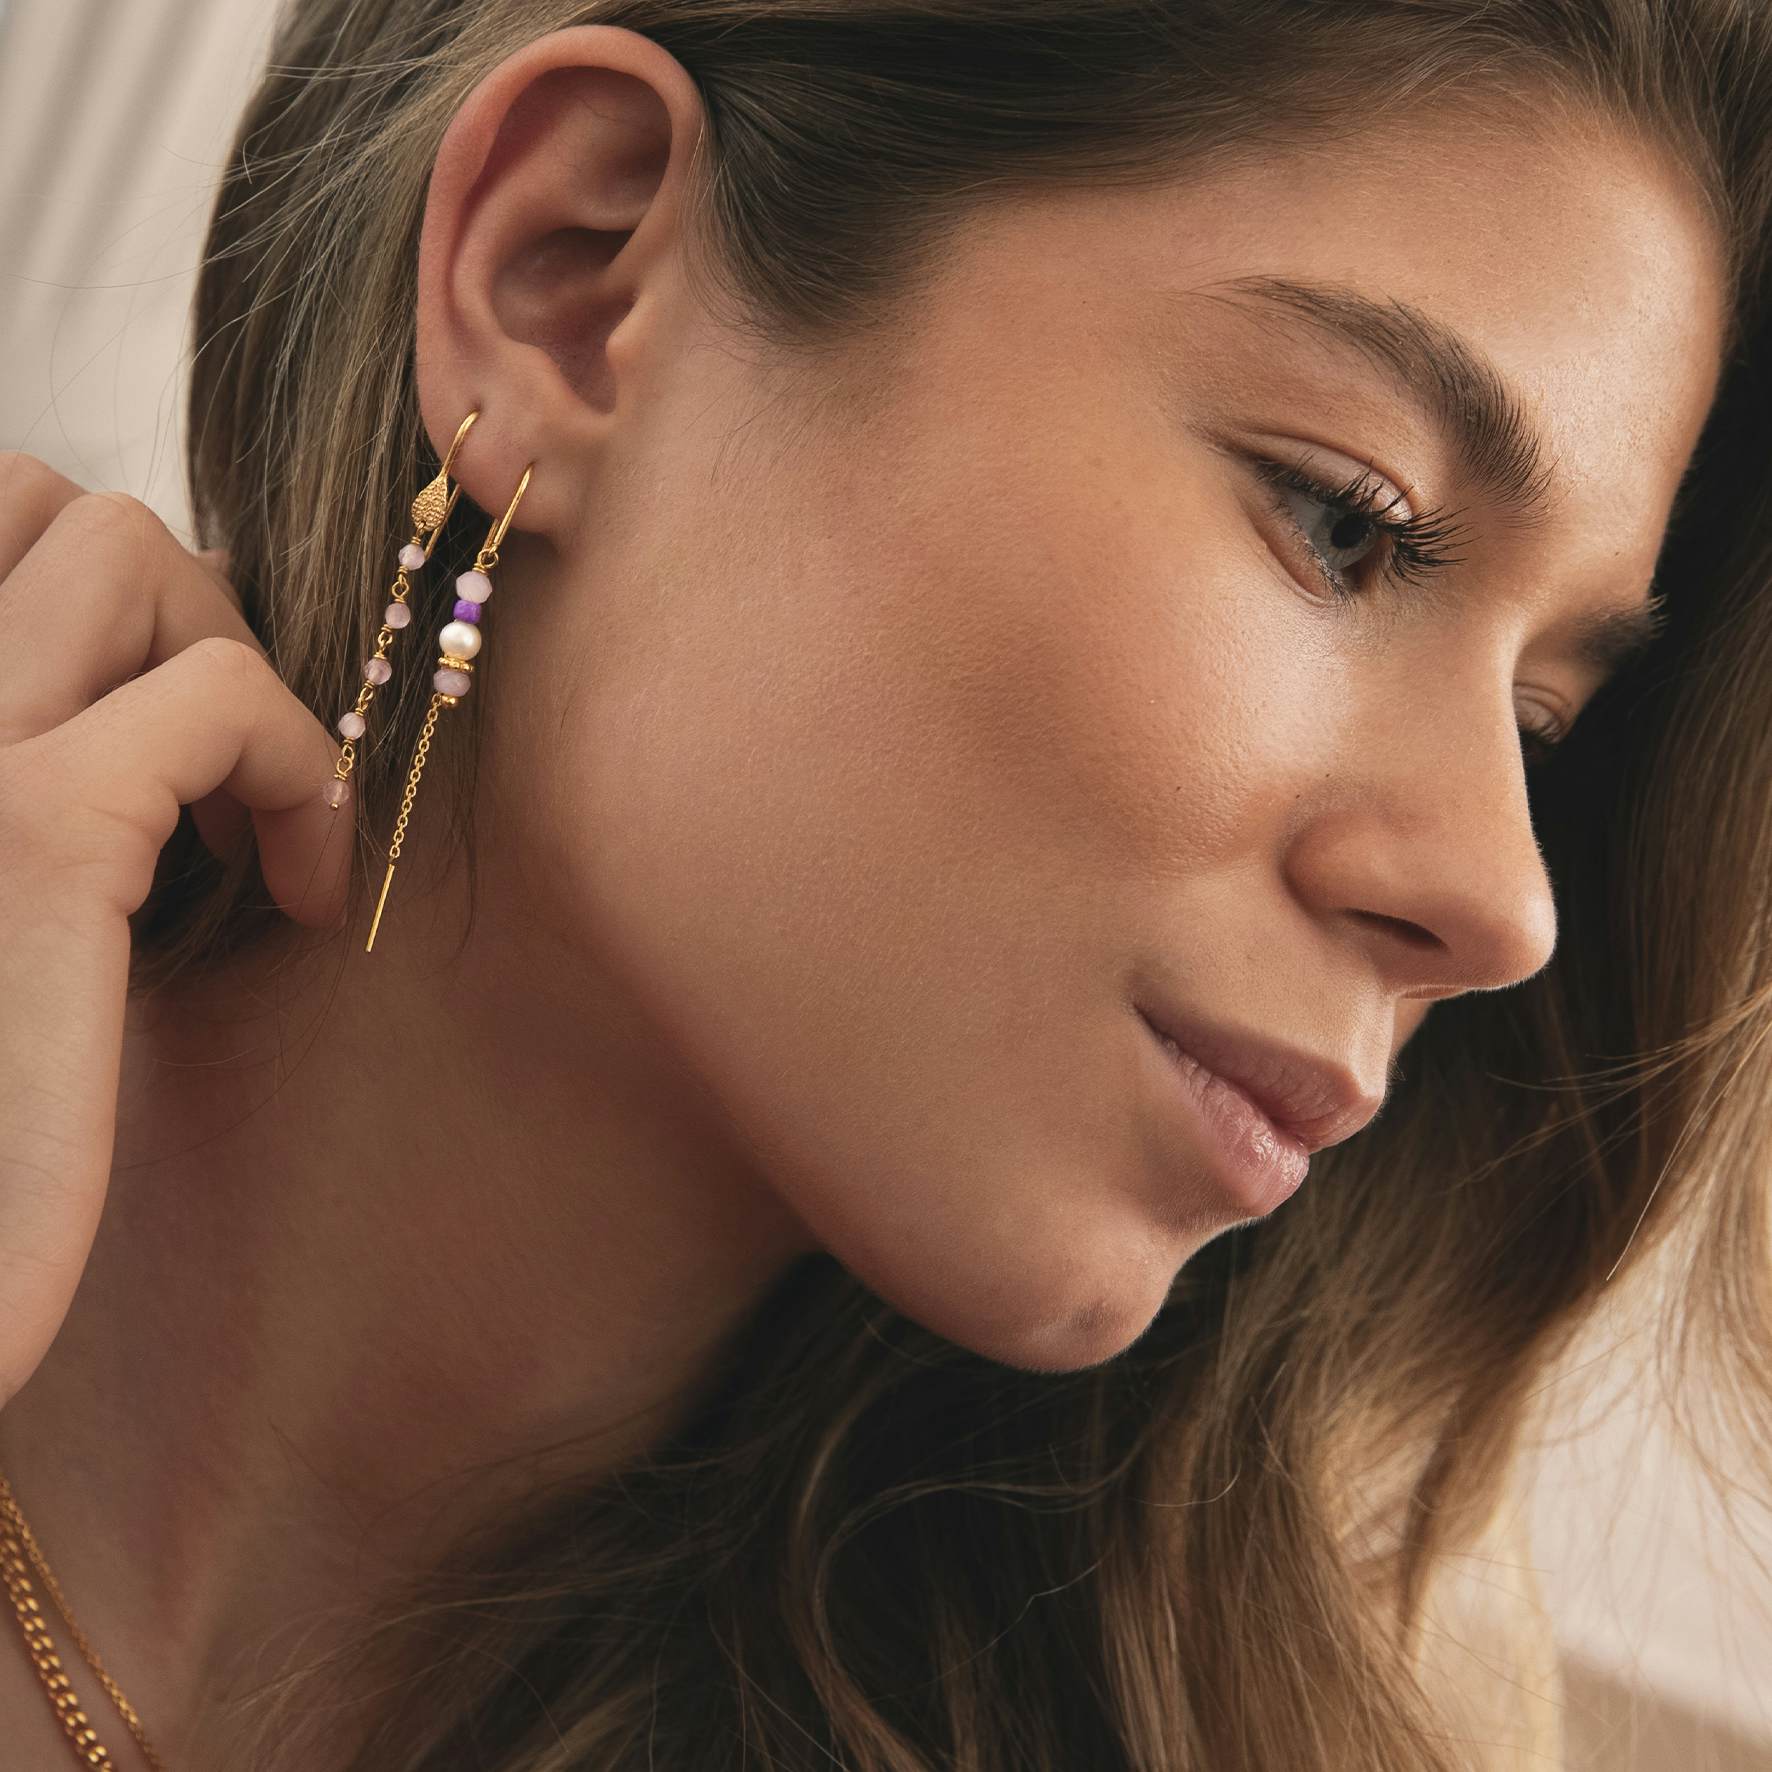 Boheme Long Pink Earrings von Sistie in Vergoldet-Silber Sterling 925